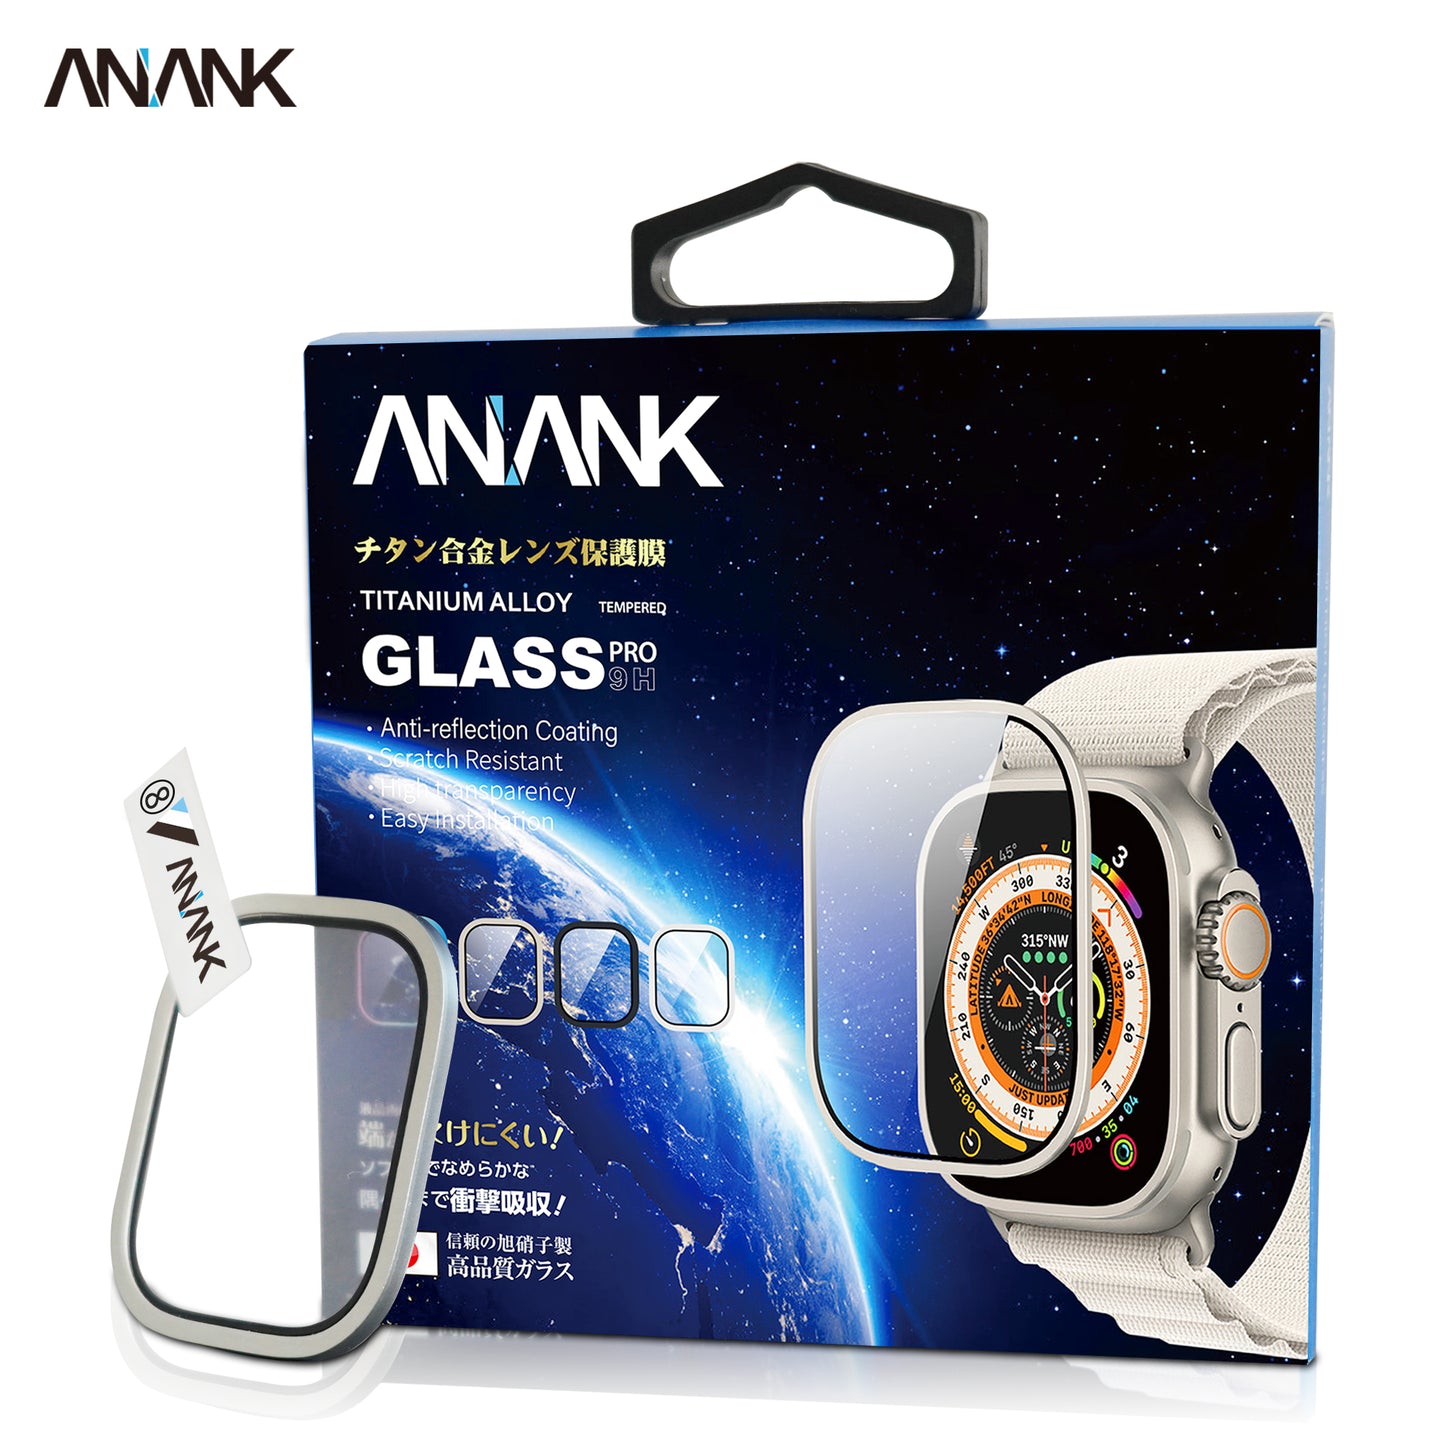 ANANK Titanium Alloy Aluminum Frame + Tempered Glass Apple Watch Guard